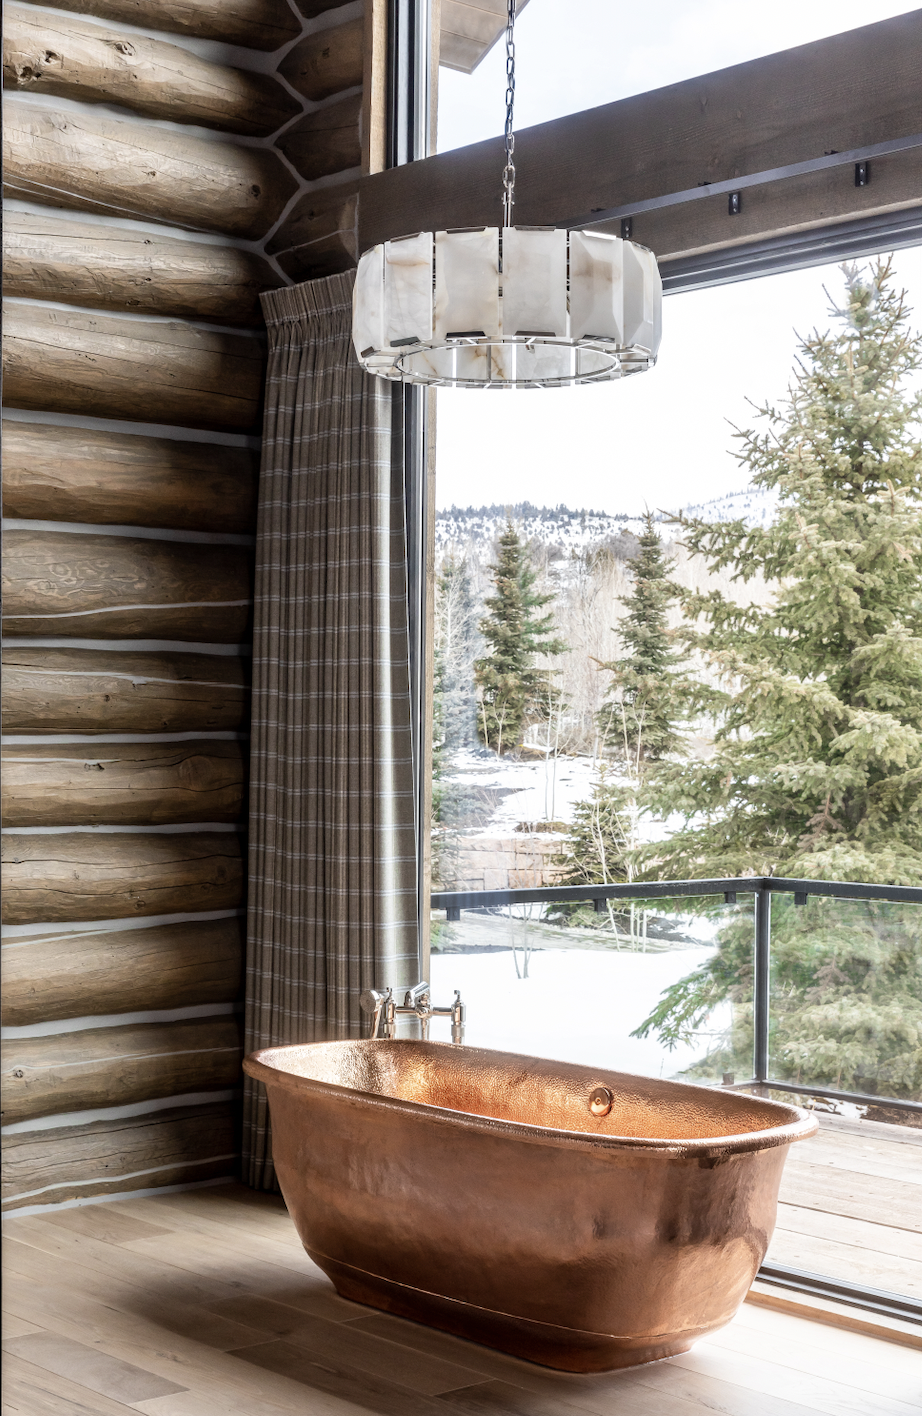 Harlow Calcite De Round Chandelier, Bond design company, interior design, copper bathtub